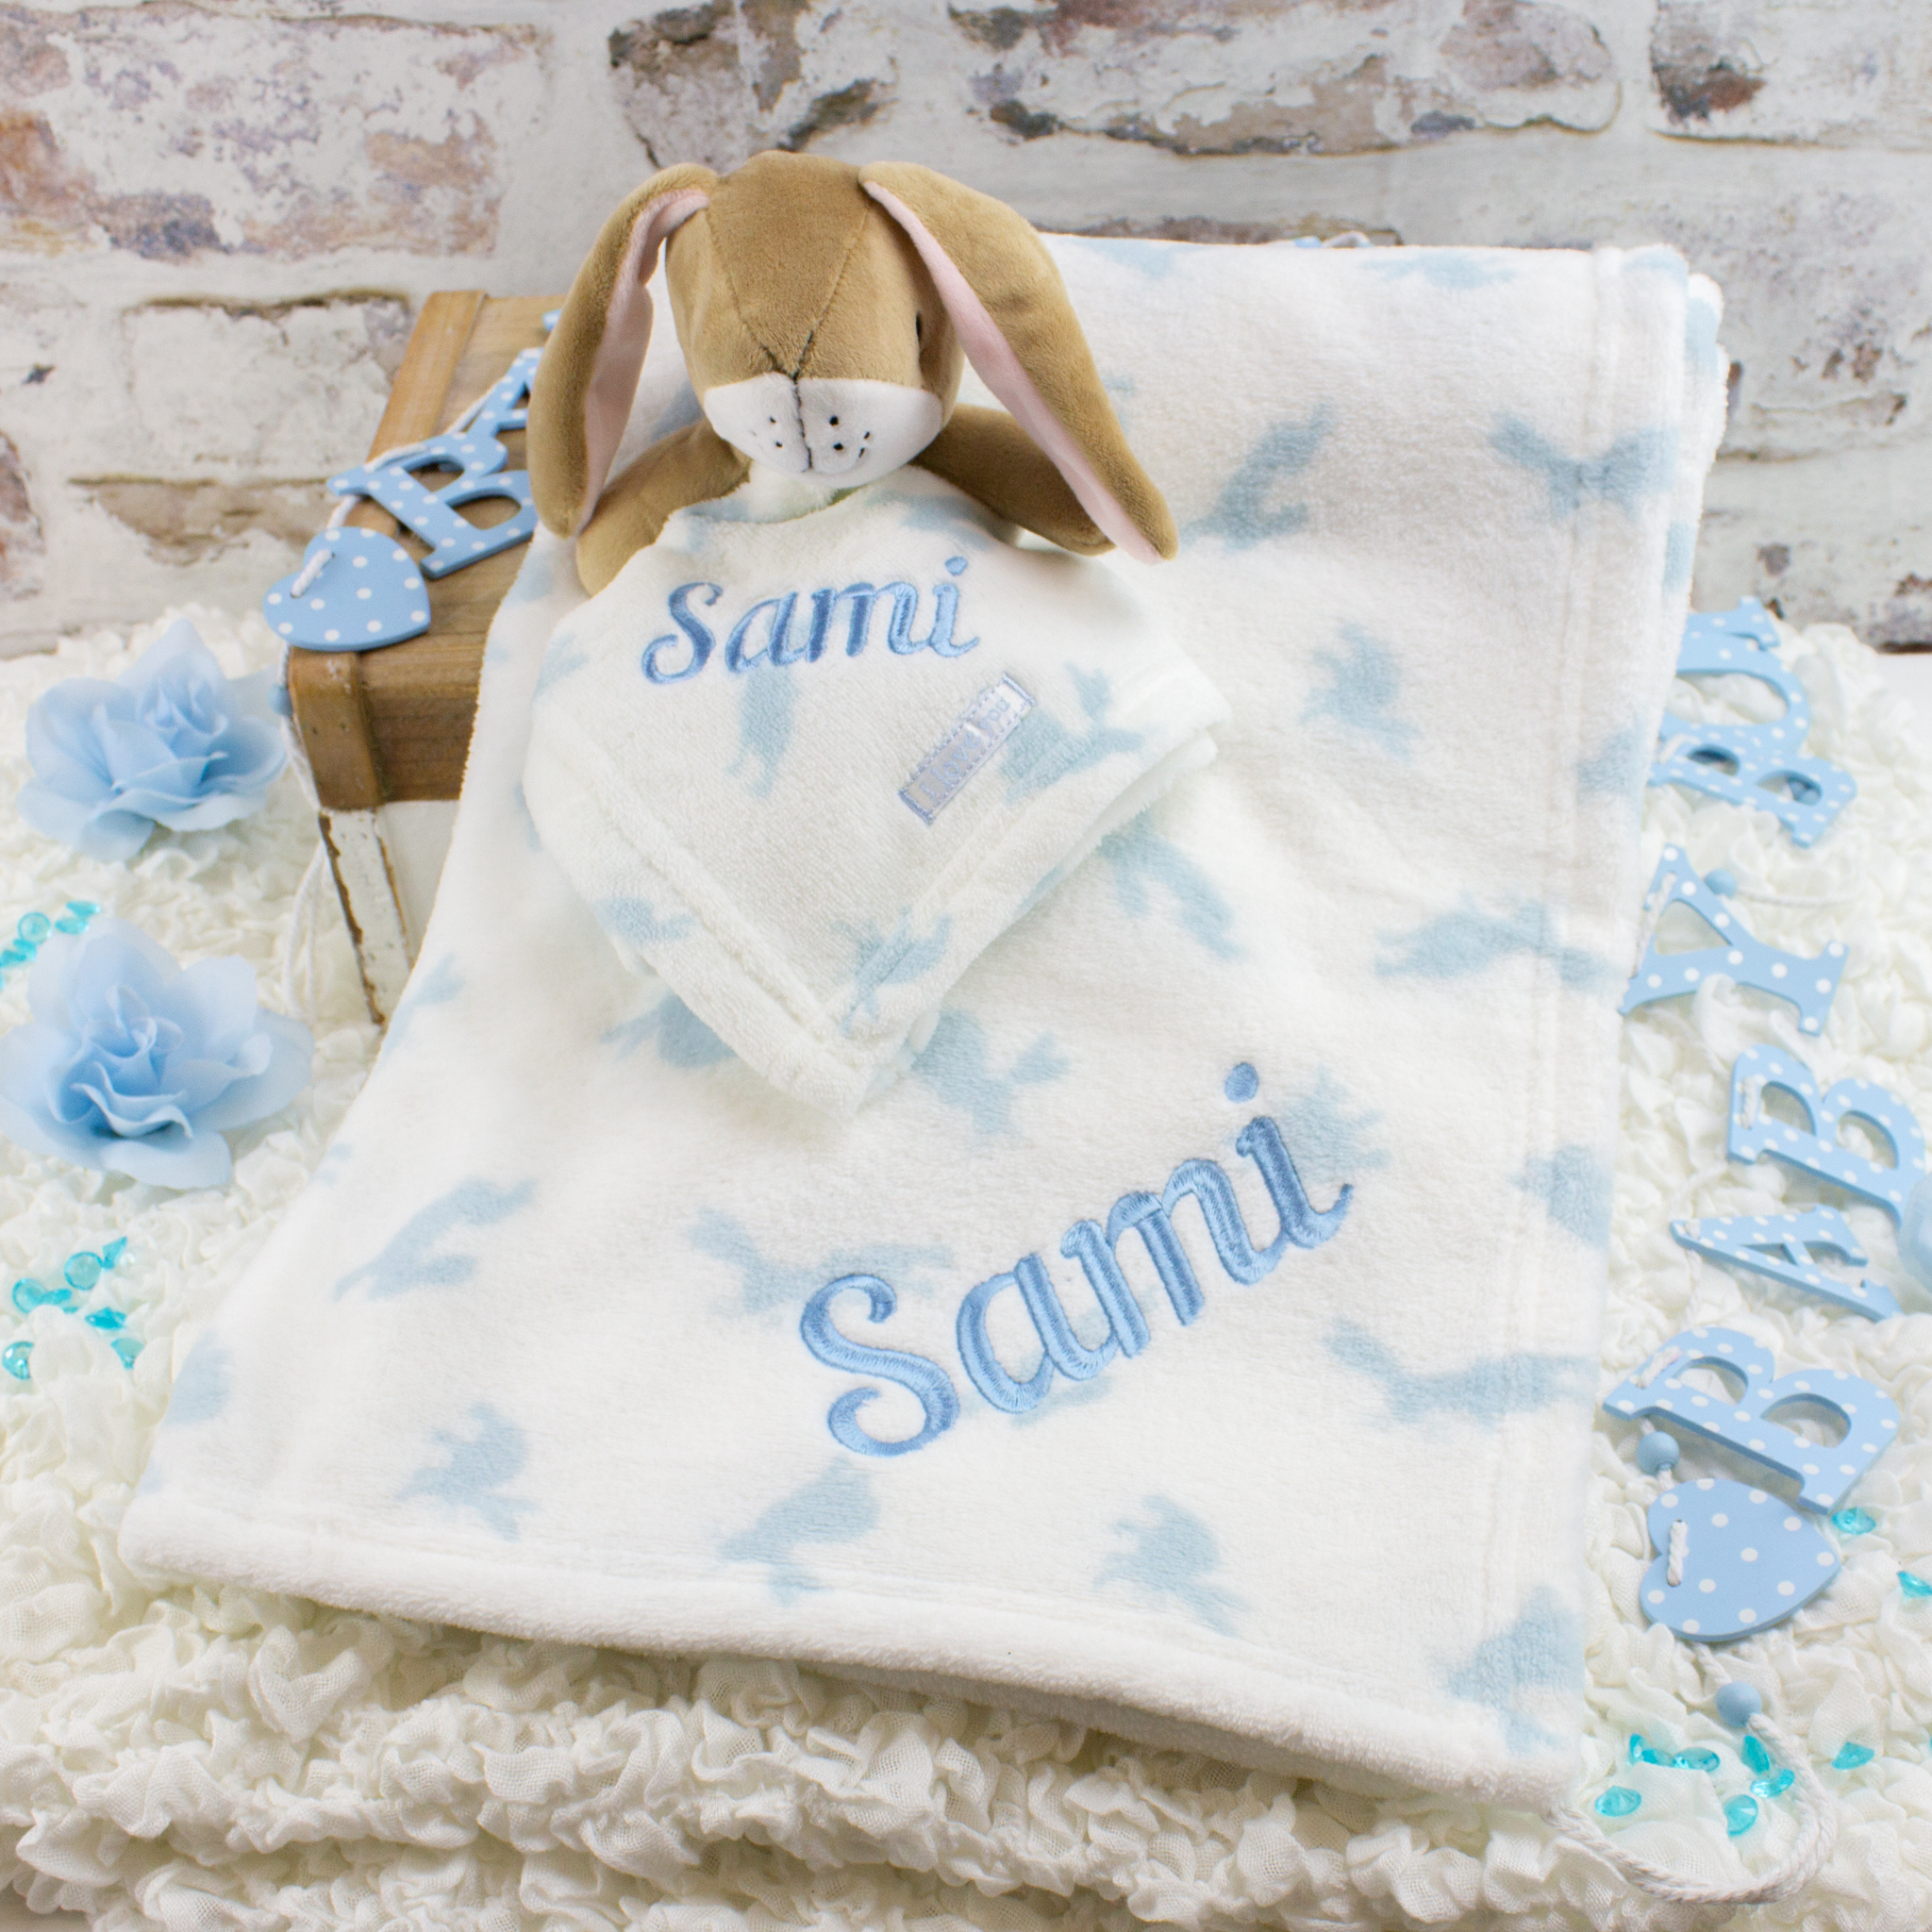 Personalised Blue baby blanket & comforter gift set